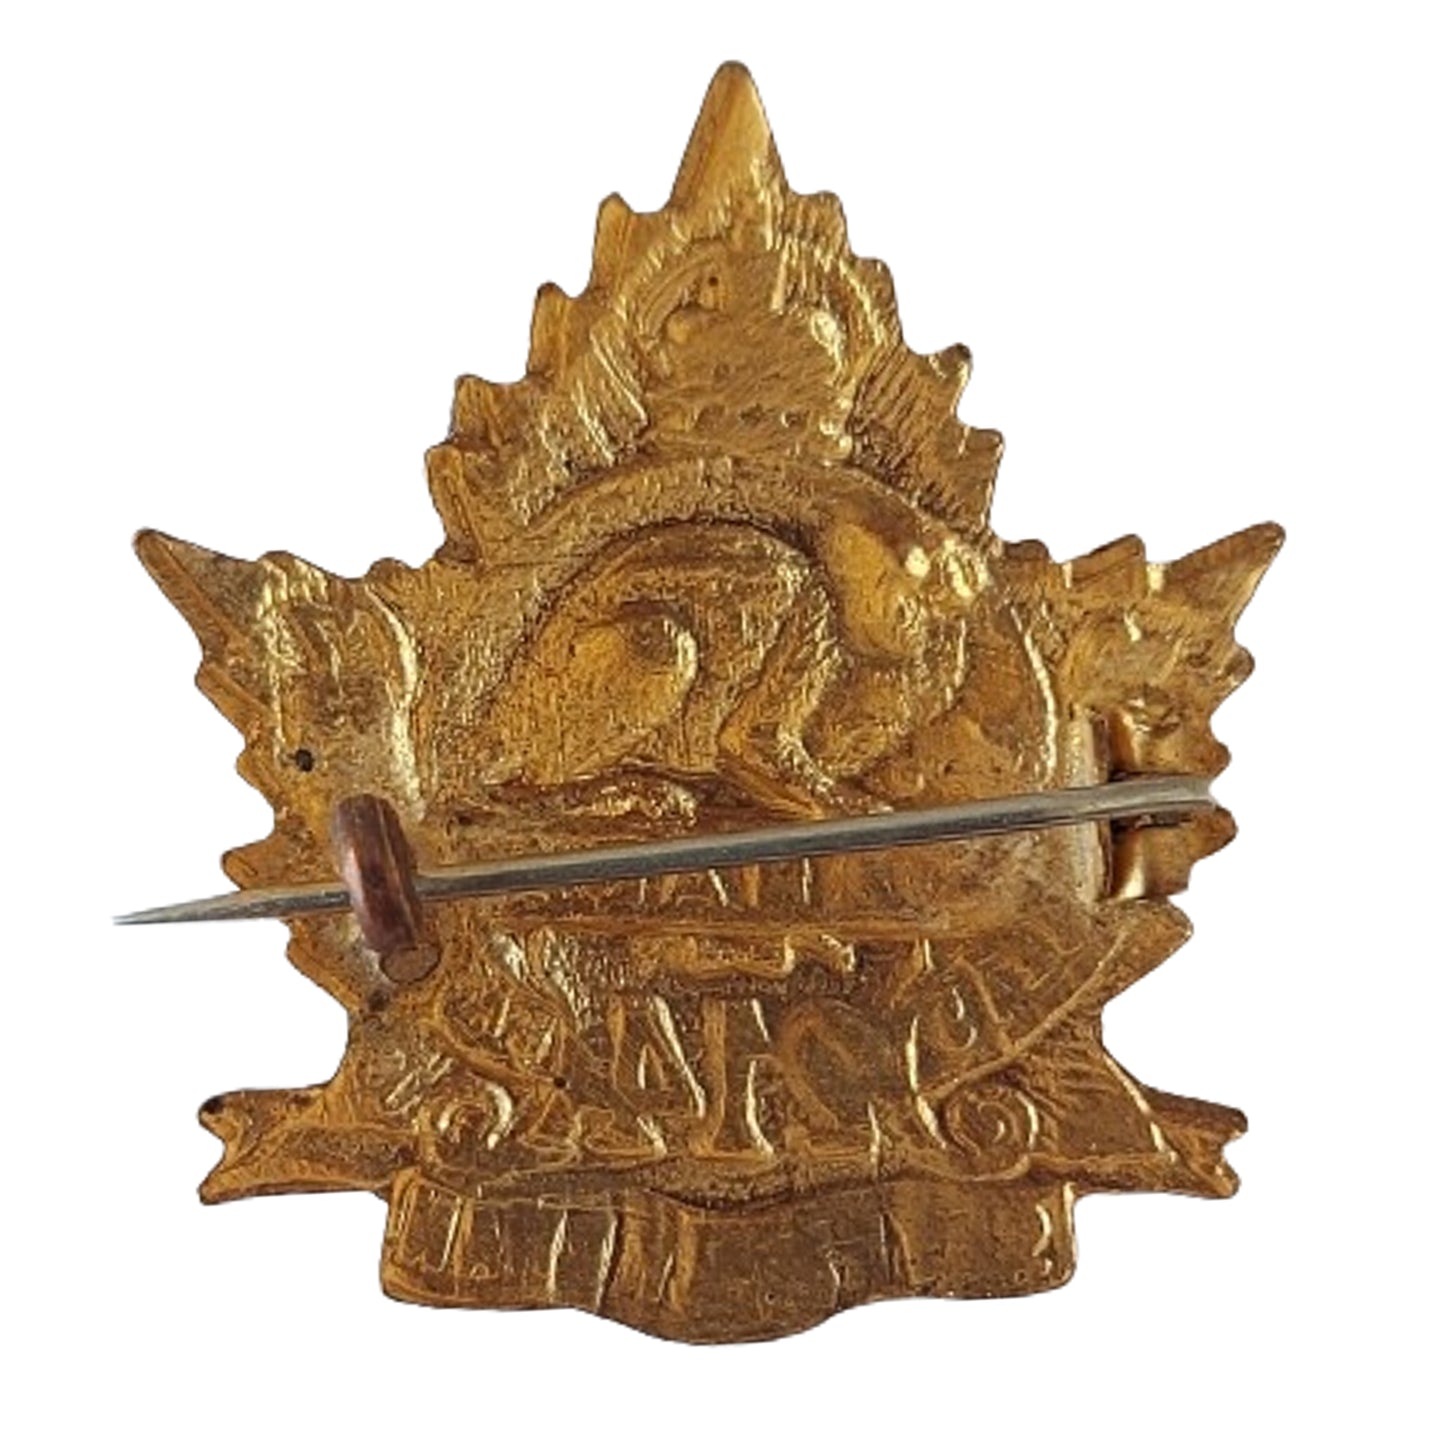 WW1 Canadian 214th Battalion Sweetheart Badge -Wadena Saskatchewan